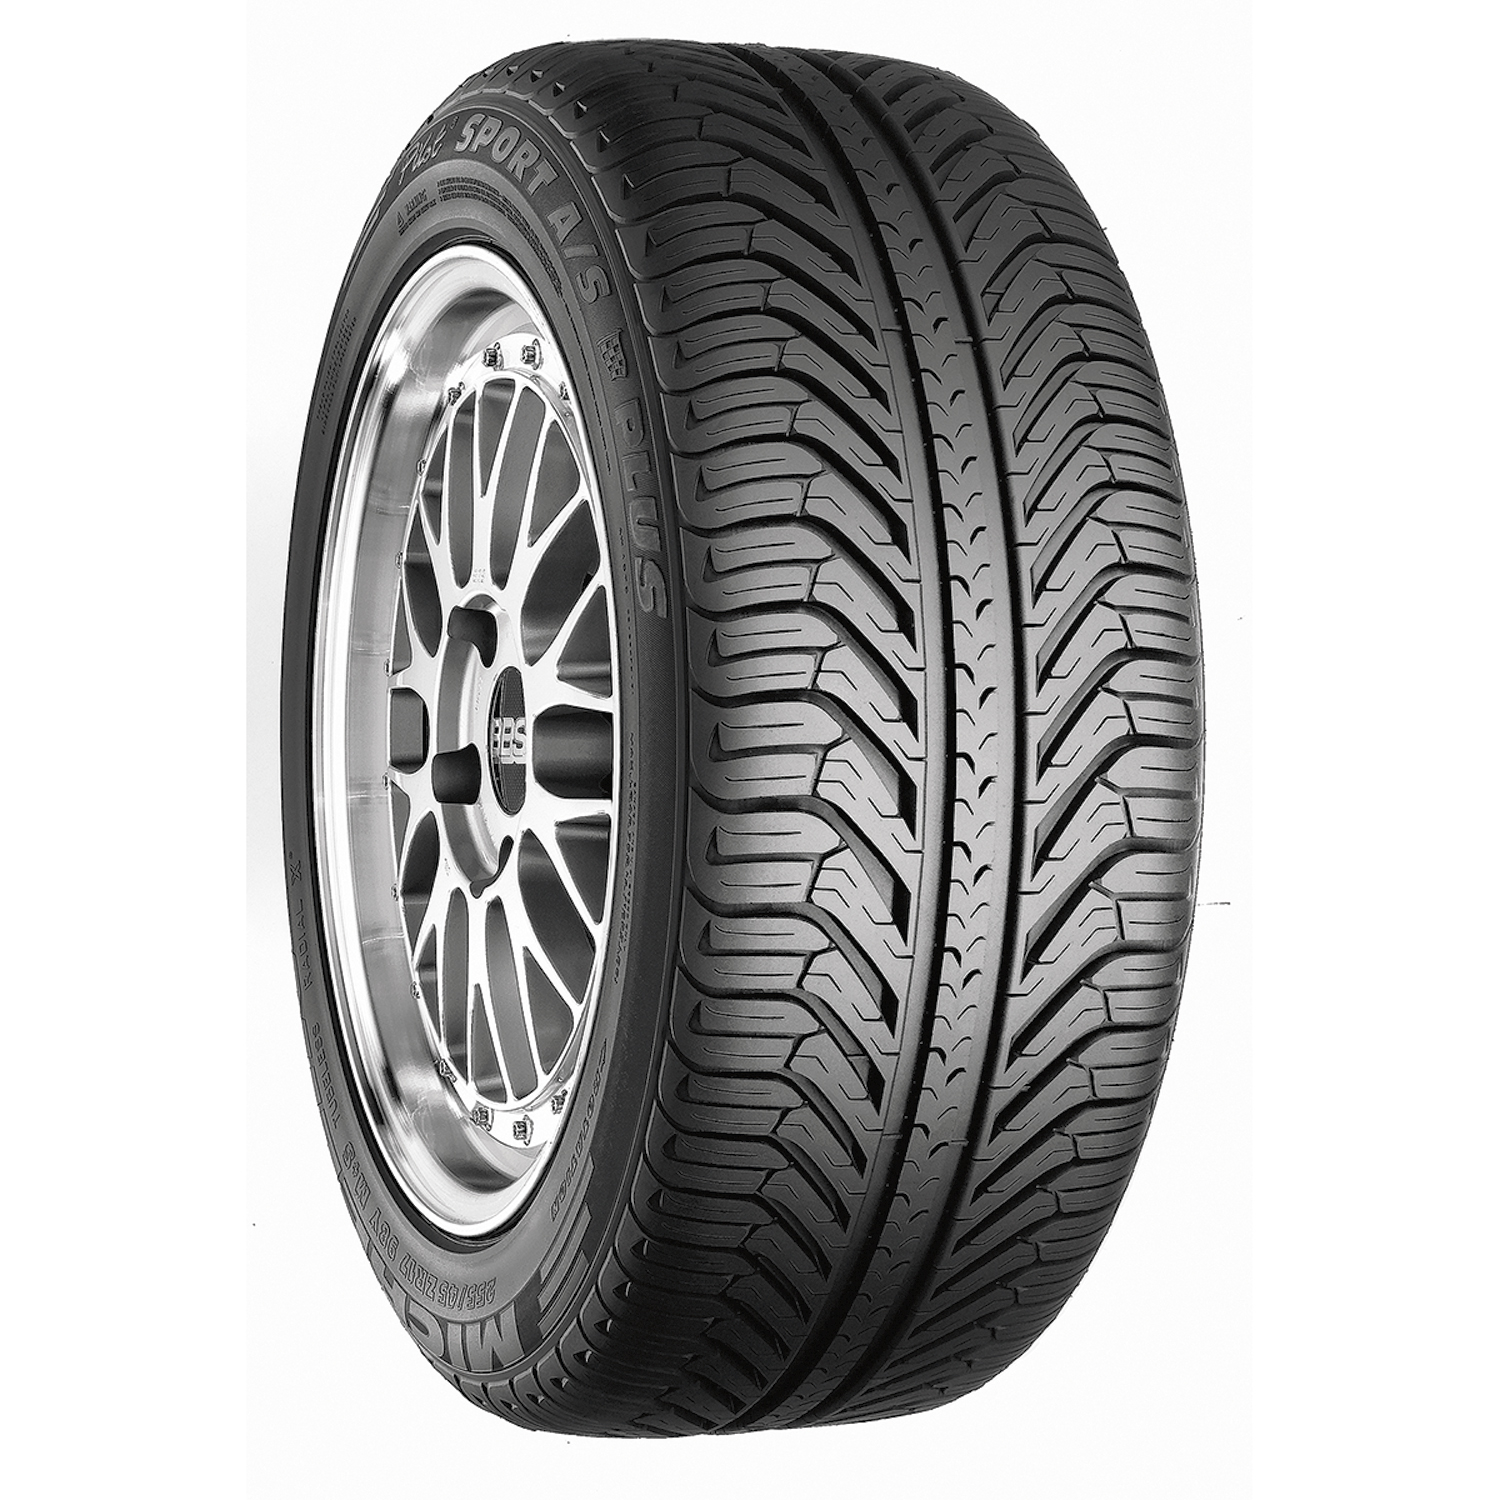 Michelin Pilot Sport A/S Plus - 225/55R17 97W BW - All Season Tire